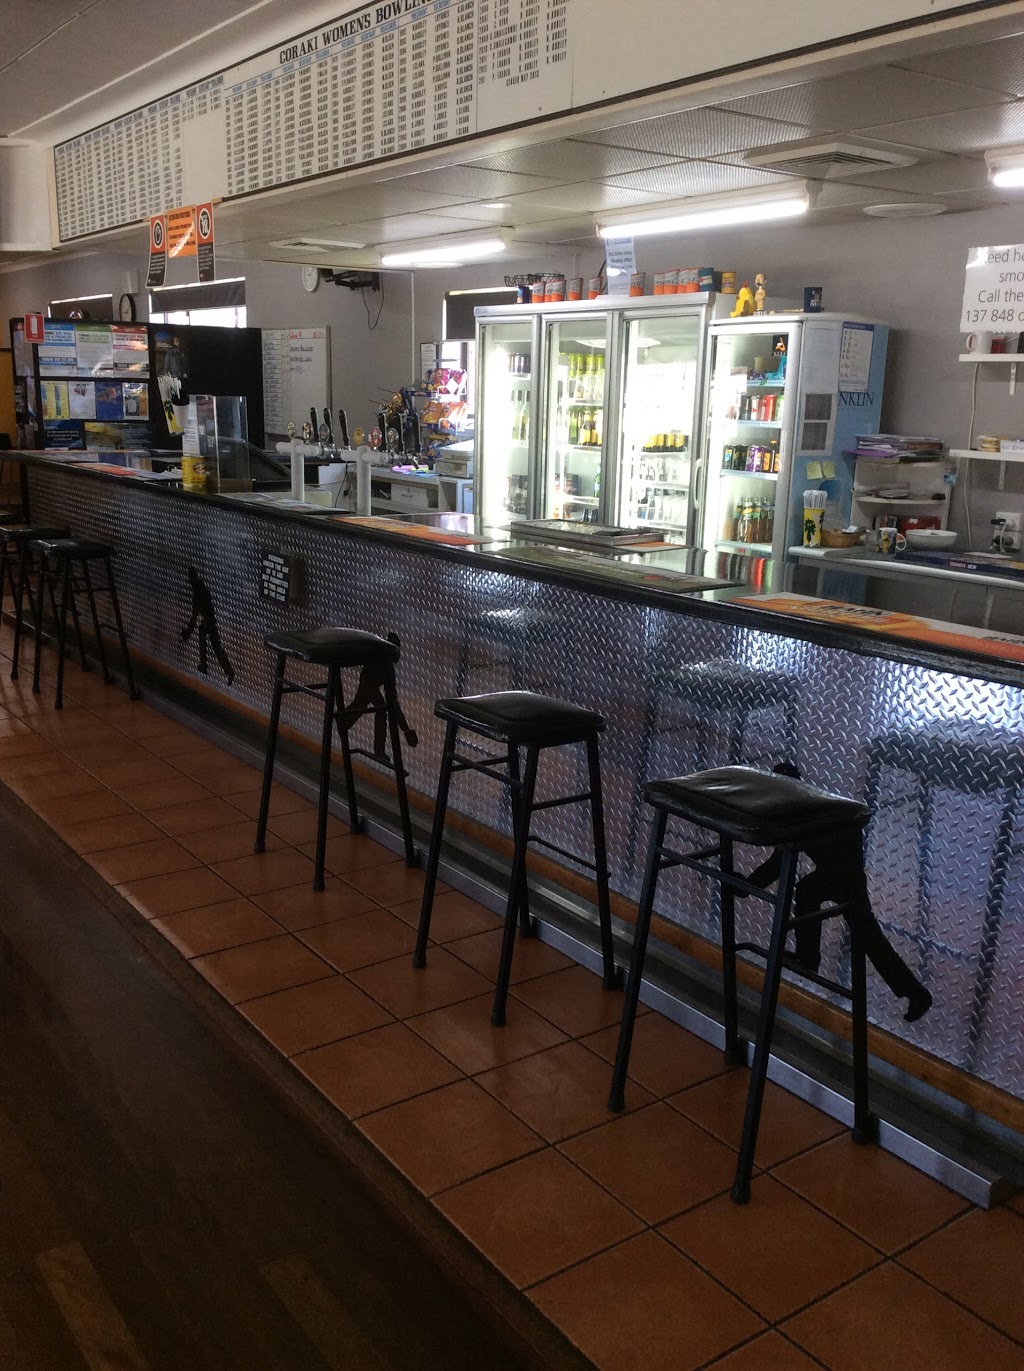 Coraki Memorial Bowling Club | bar | 17 Richmond Terrace, Coraki NSW 2471, Australia | 0266832229 OR +61 2 6683 2229